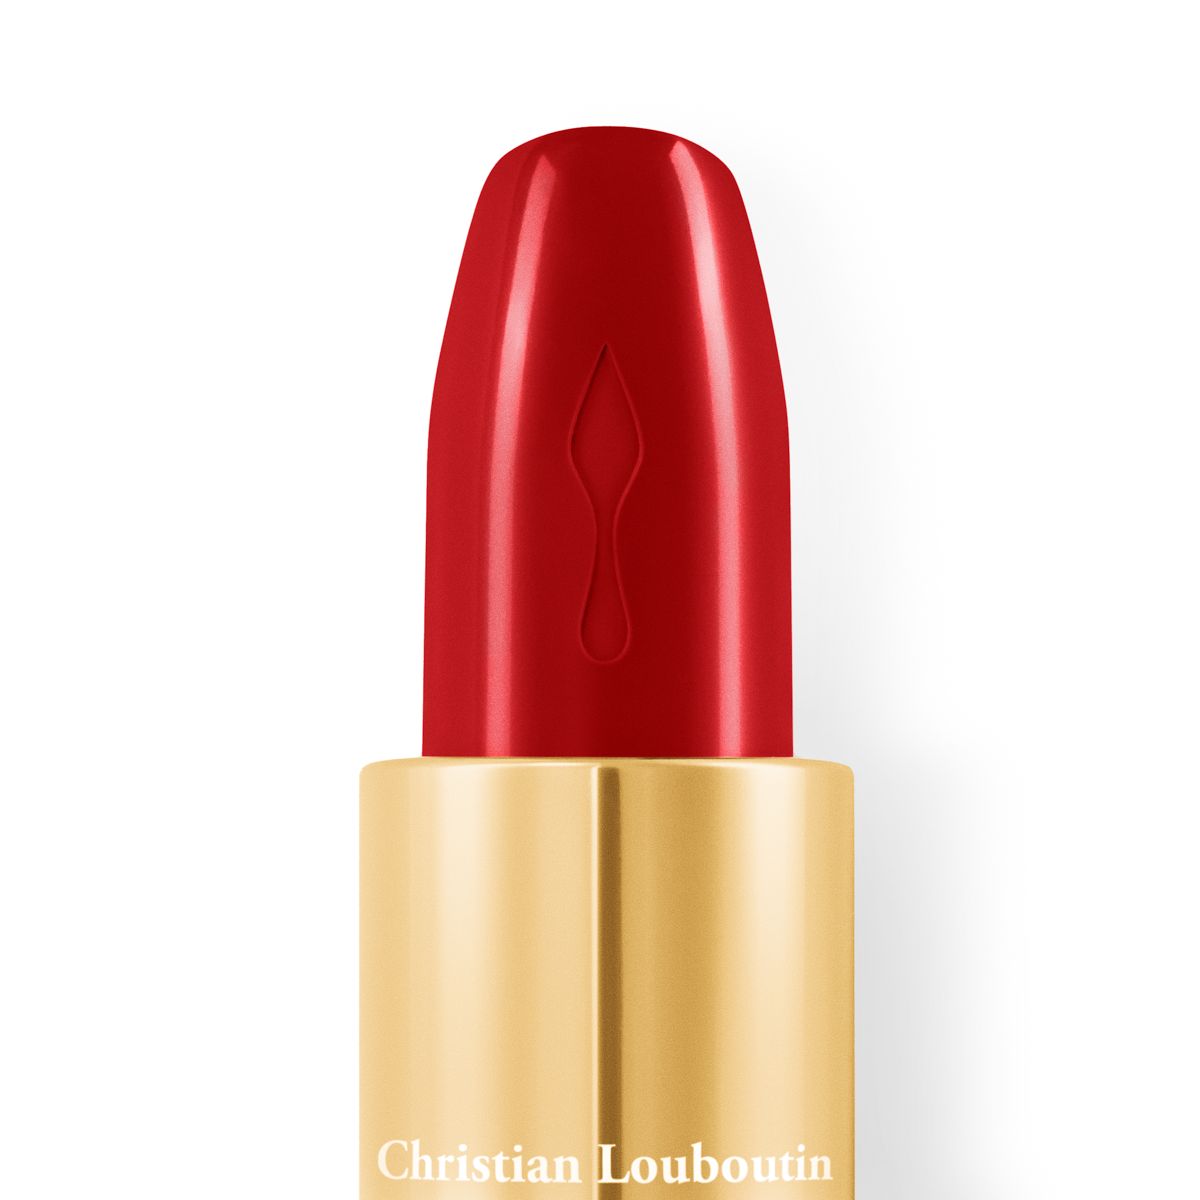 NET-A-PORTER Christian Louboutin Beauty Silky Satin Lip Colour - Catchy One  90.00